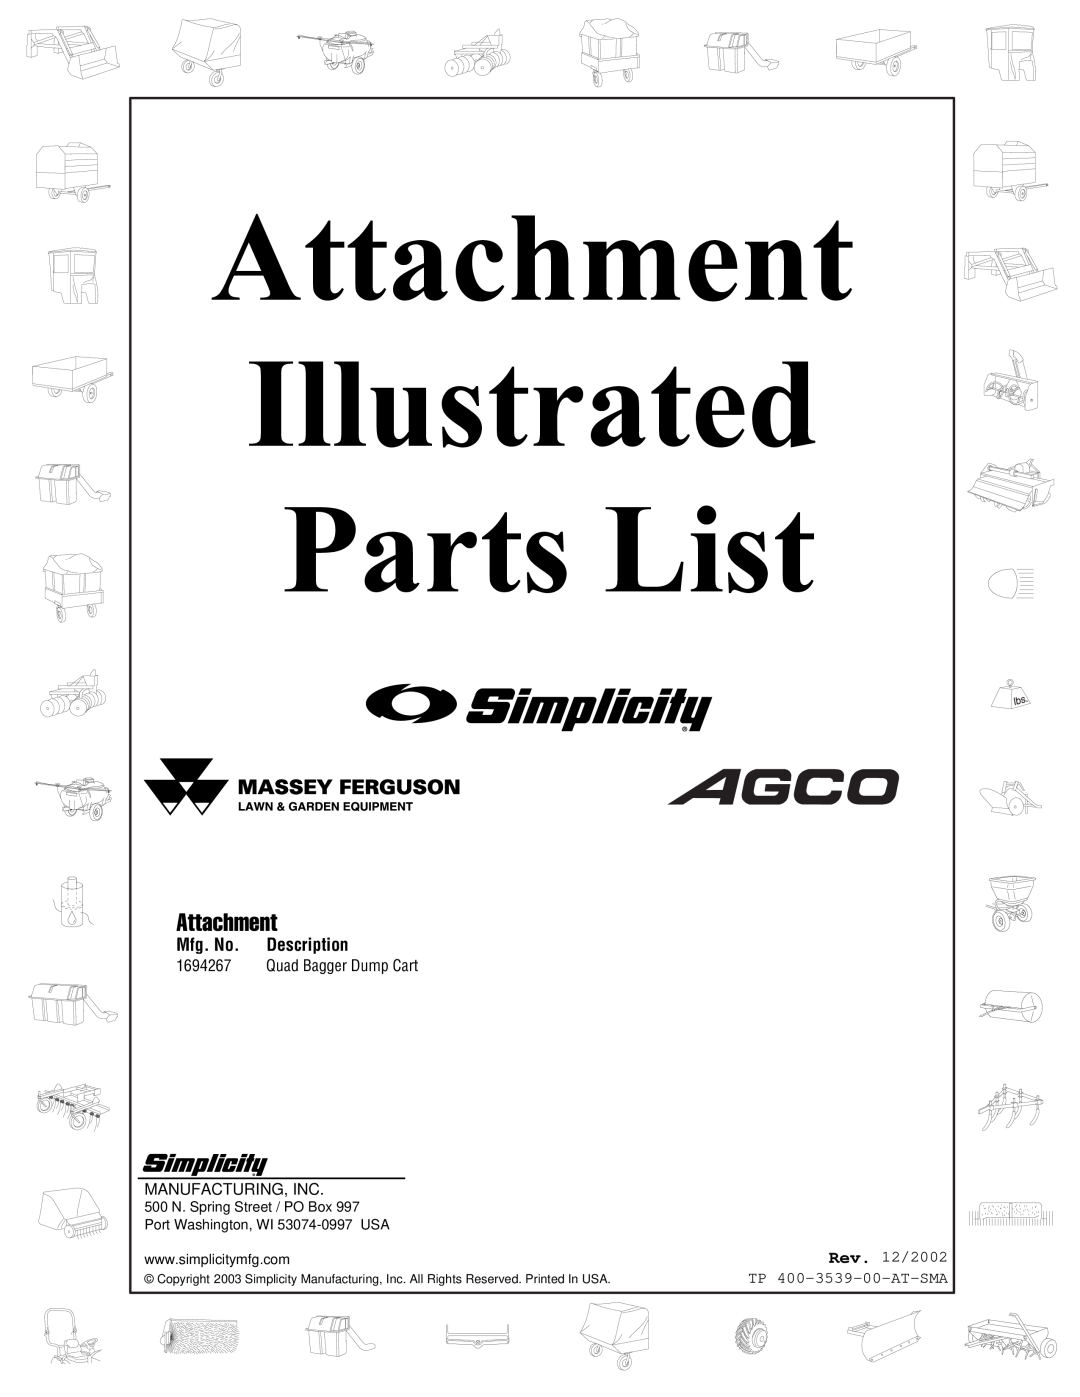 Snapper manual Mfg. No. Description, Rev. 12/2002, TP 400-3539-00-AT-SMA, Attachment Illustrated Parts List 